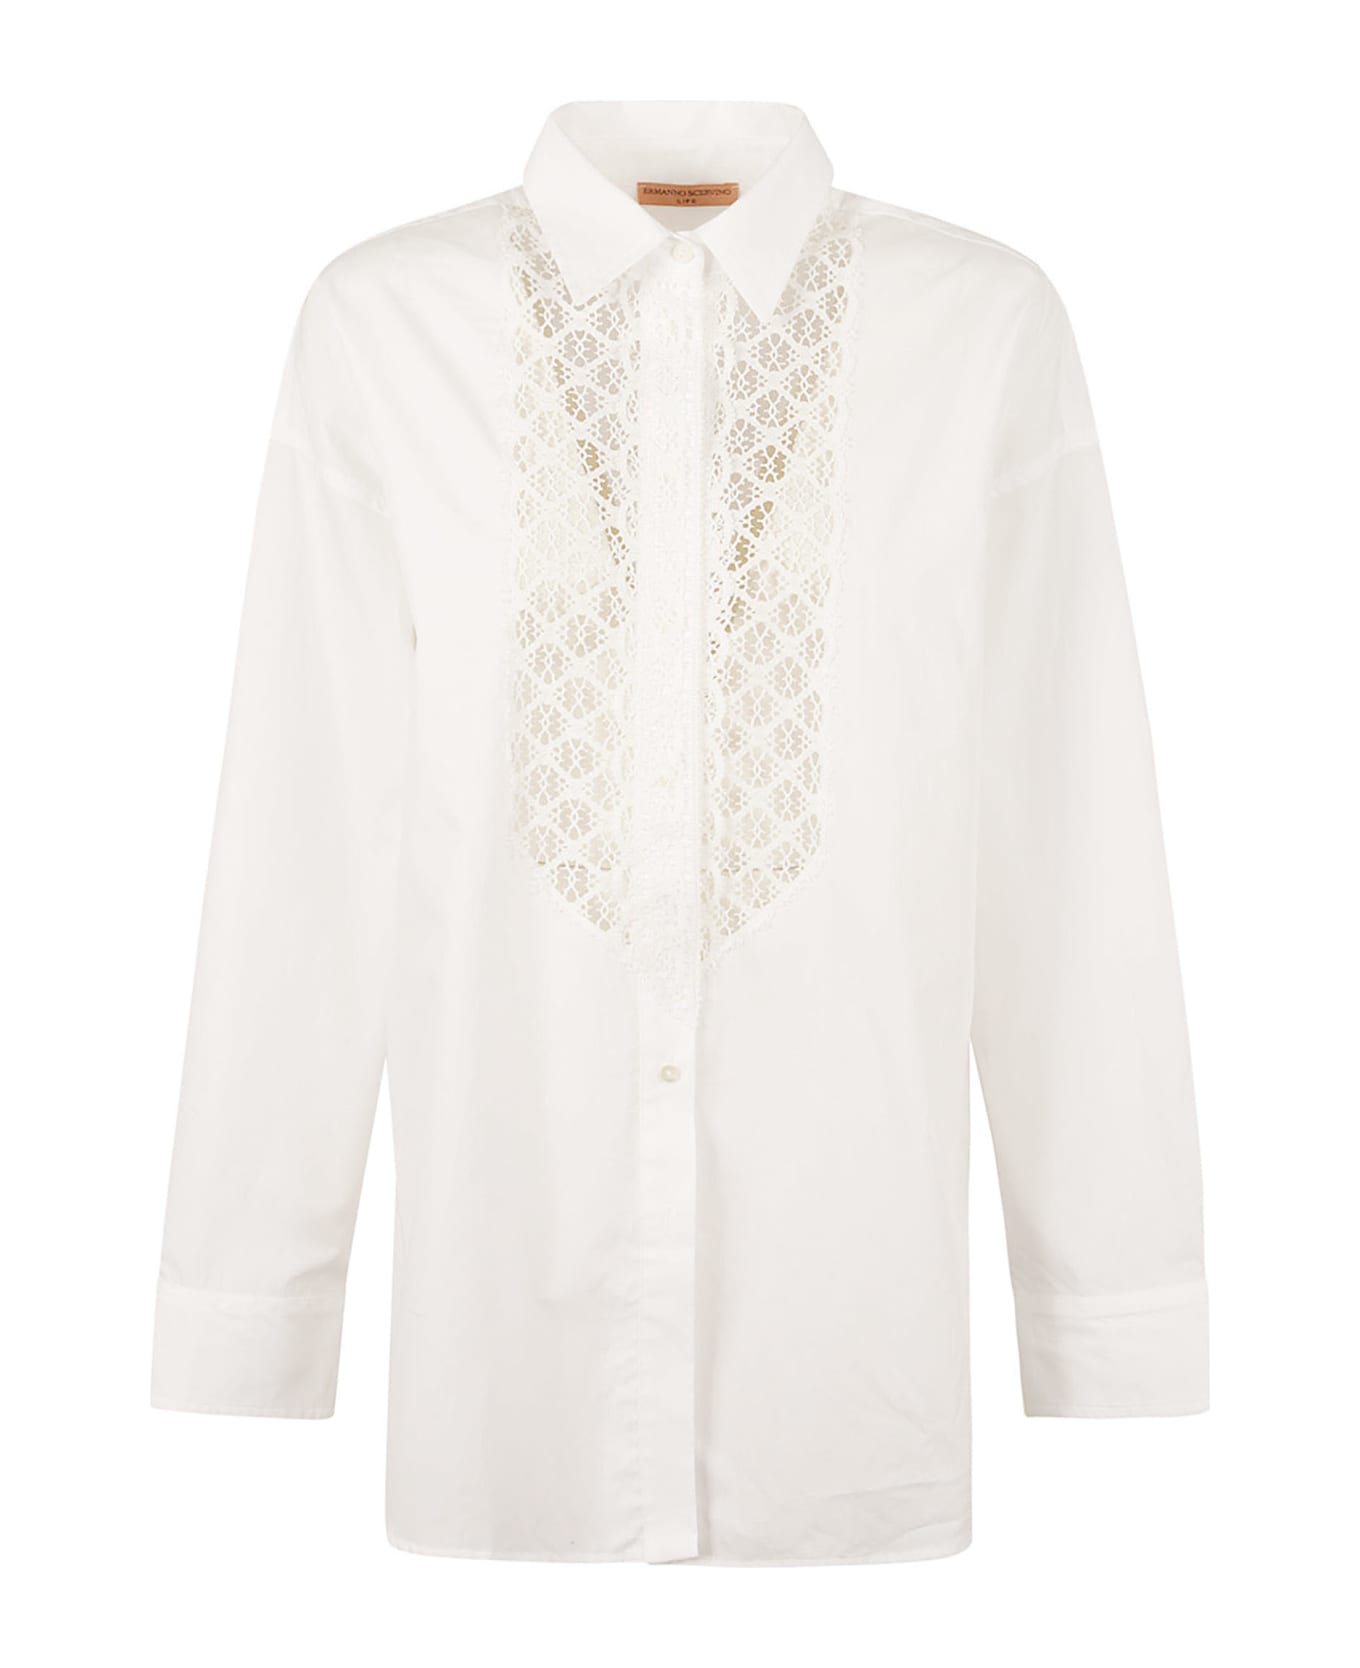 Ermanno Scervino Lace Paneled Oversize Shirt - Bright White